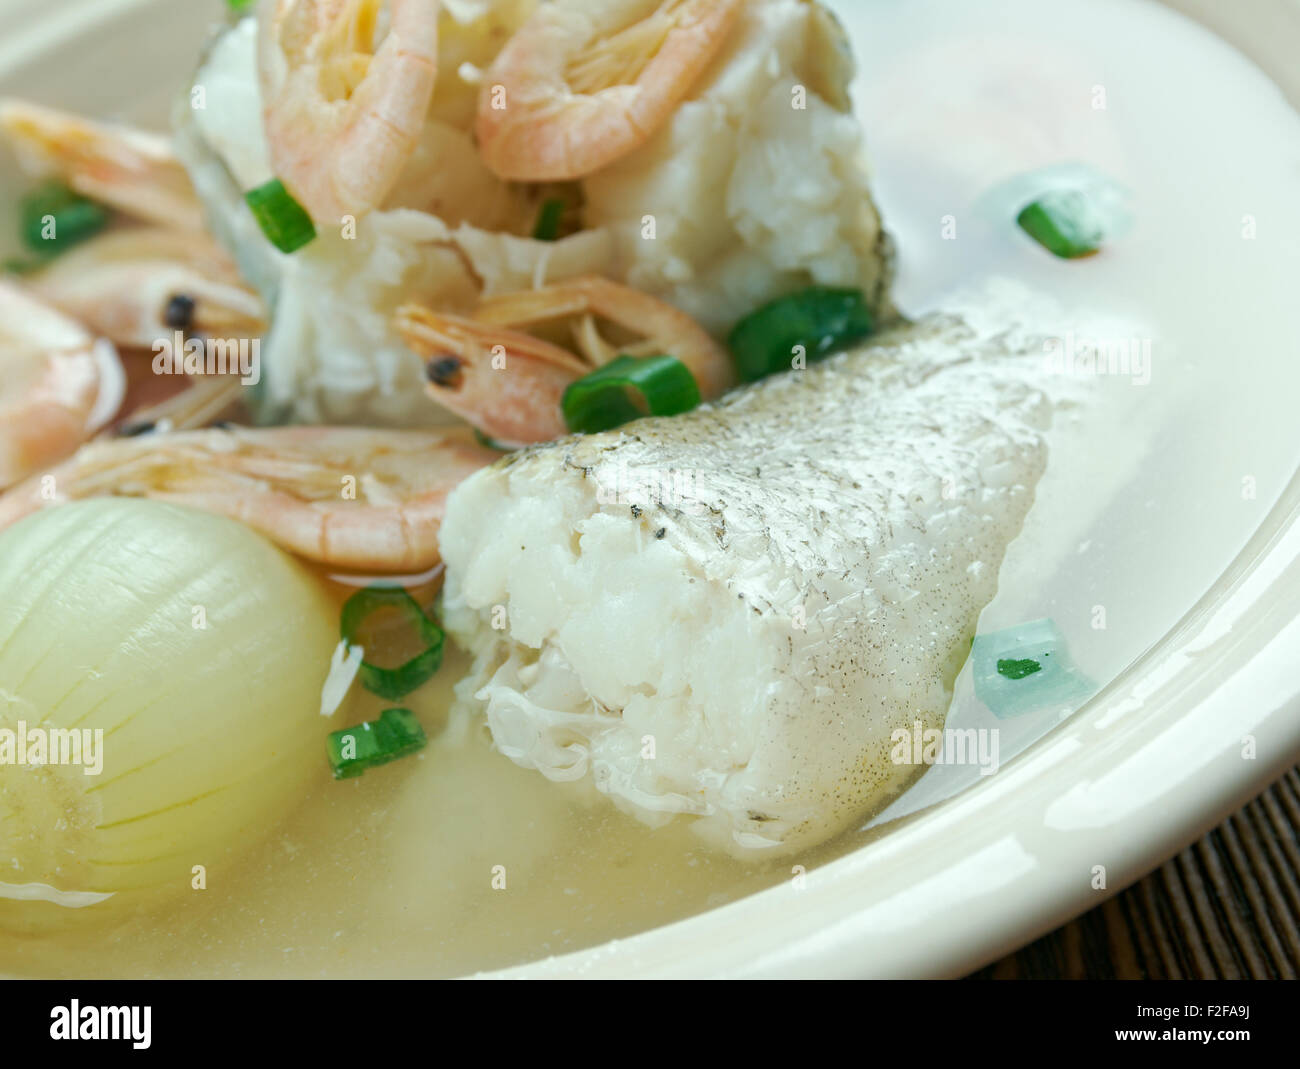 Caldo de siete mares - Mexican version of fish stew Stock Photo